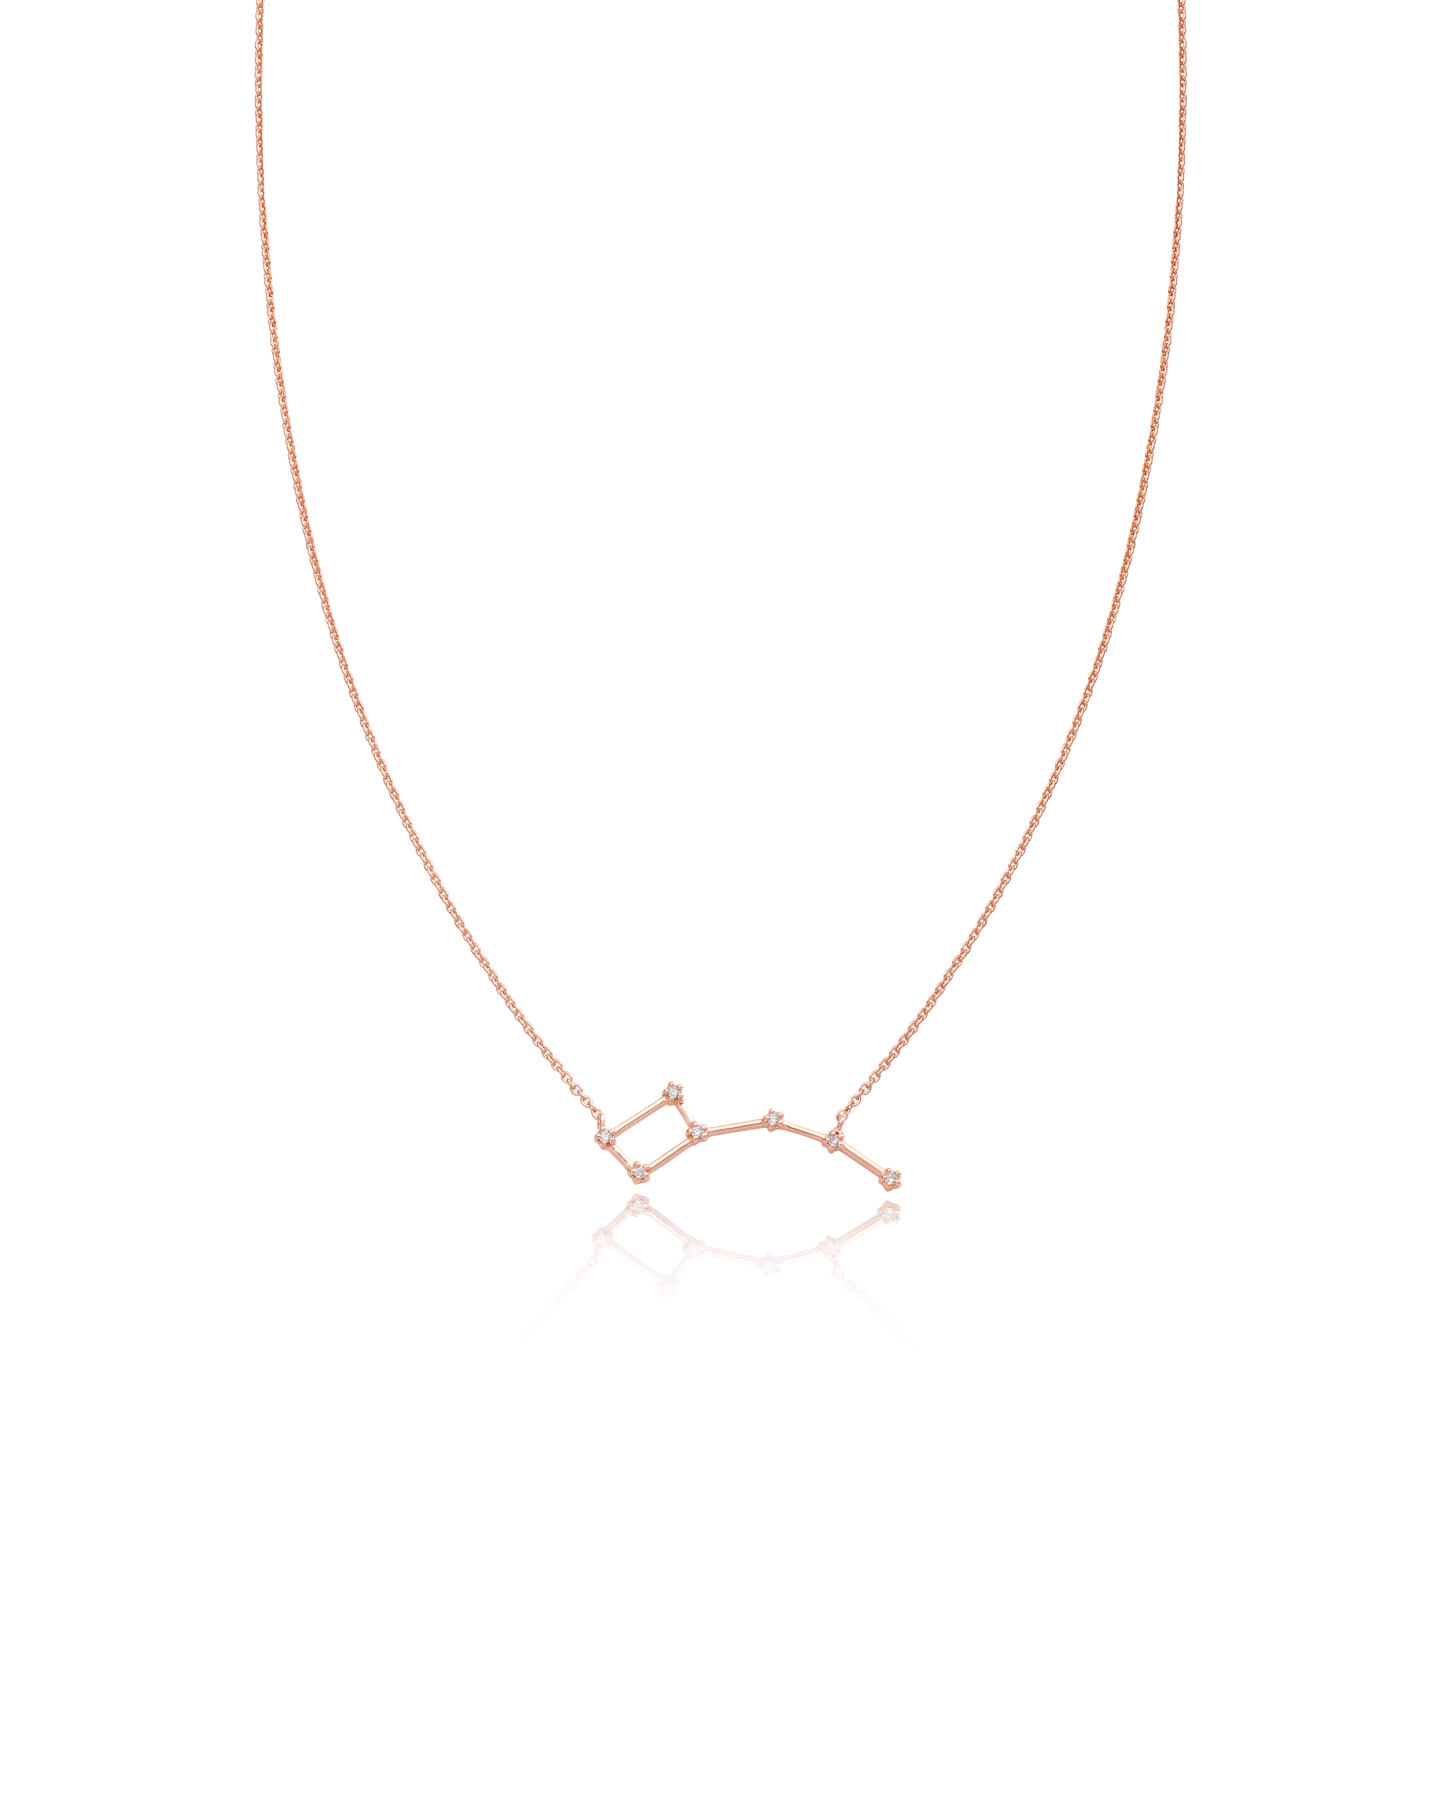 Ursa Major Constellation Necklace - 18K Rose Vermeil Necklaces magal-dev The Little Dipper 16" 